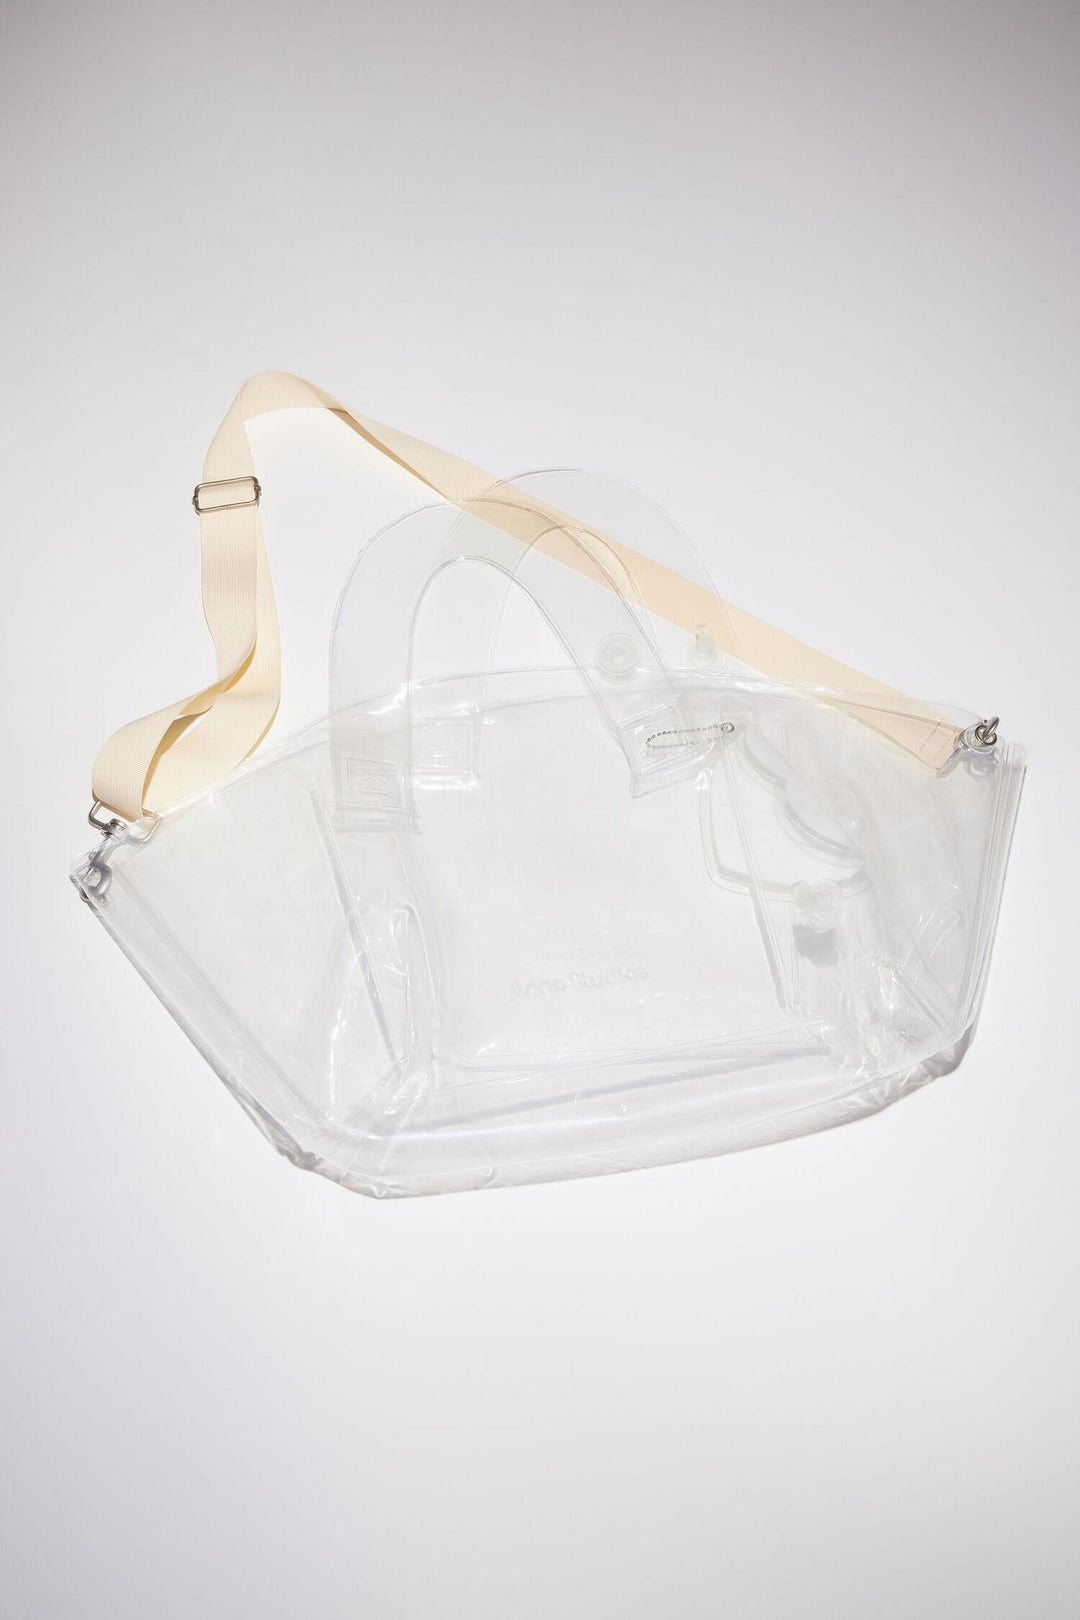 ACNE STUDIOS - Transparent Bag - Dale